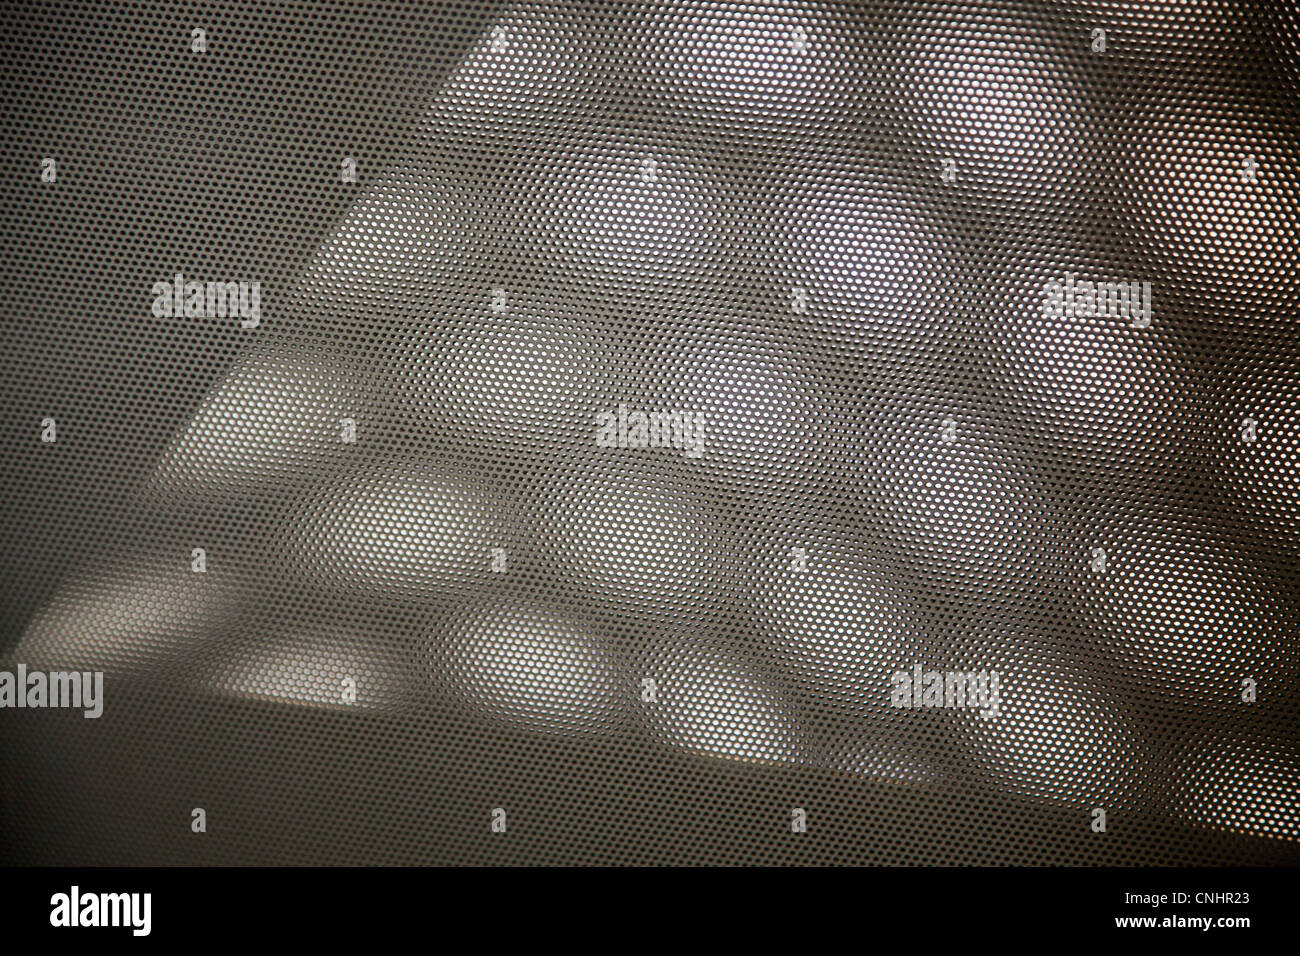 Shadows of hexagons on mesh screen Stock Photo